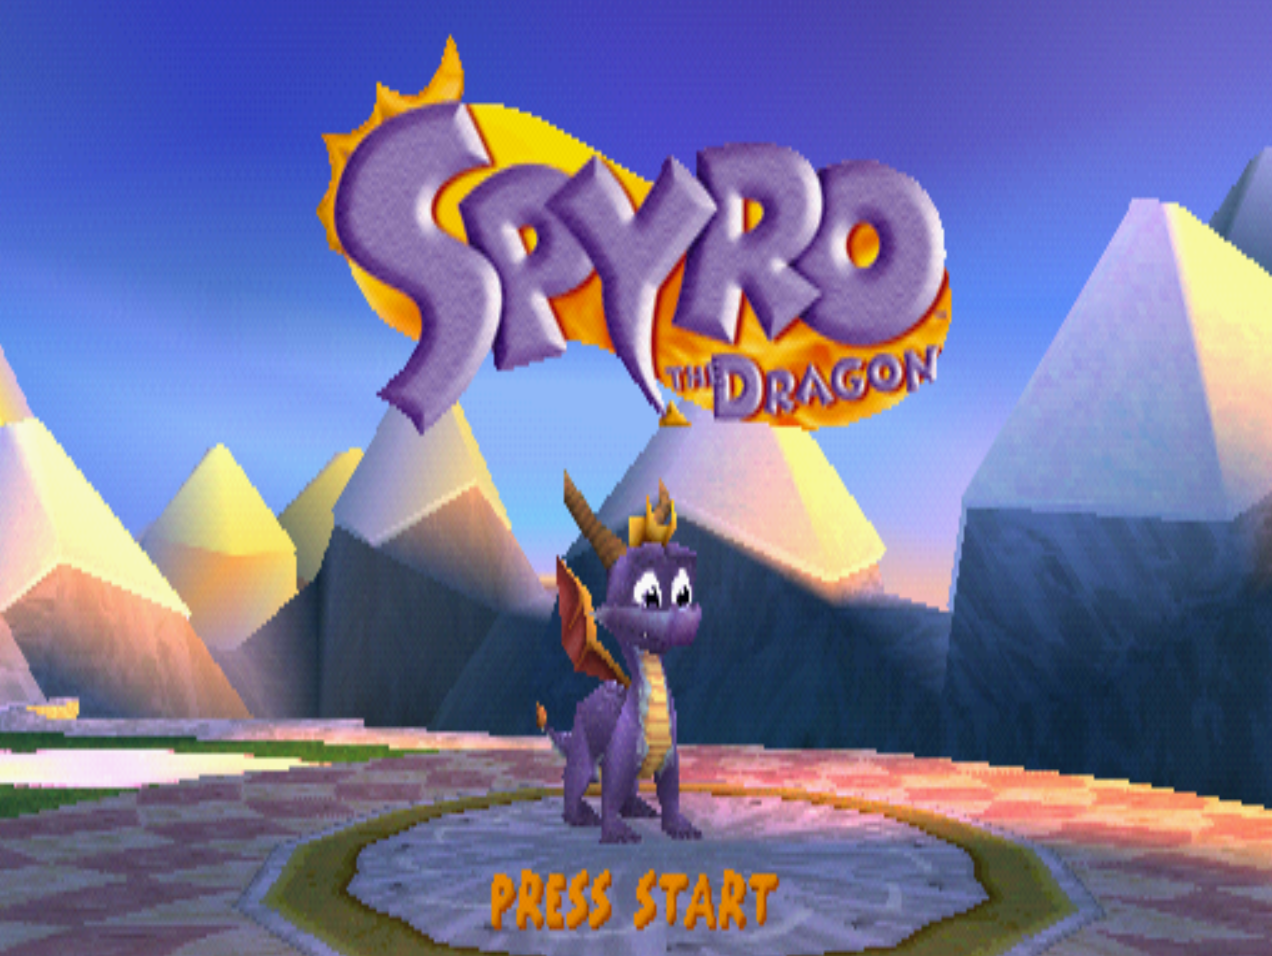 Spyro The Dragon